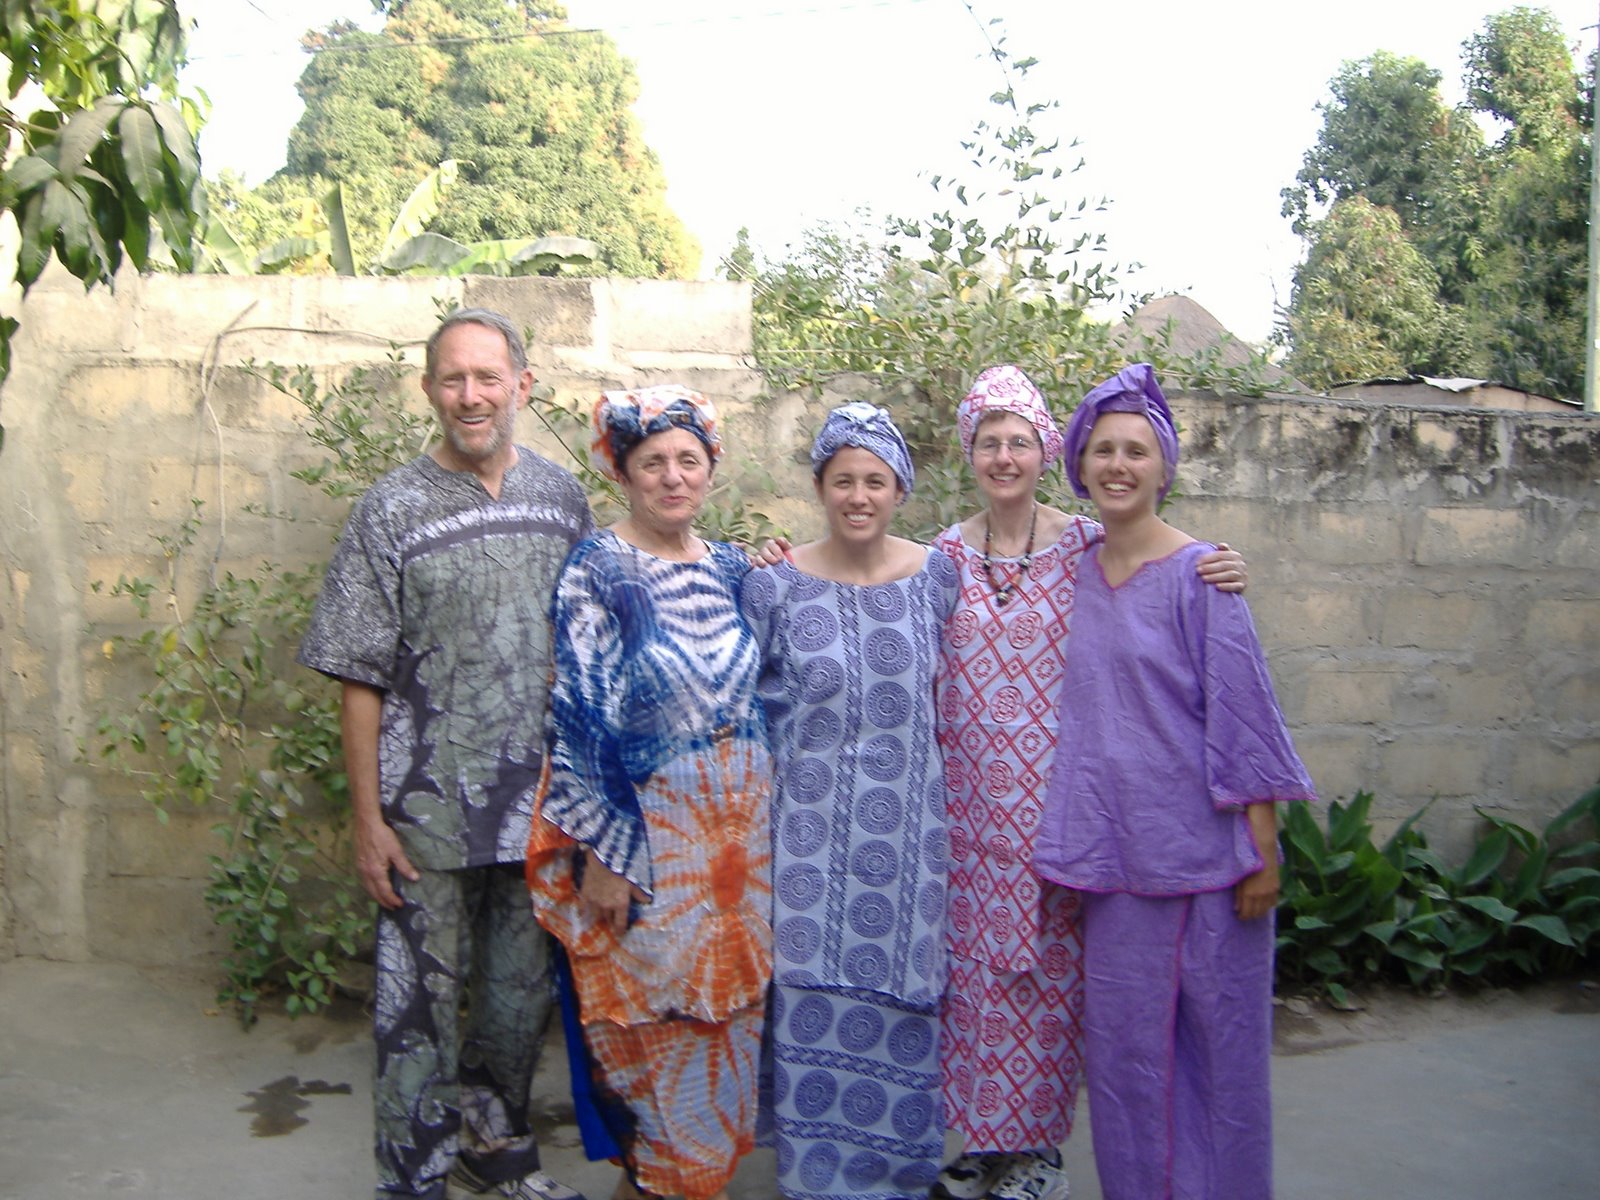 [Family+in+Senegalese+clothing.JPG]